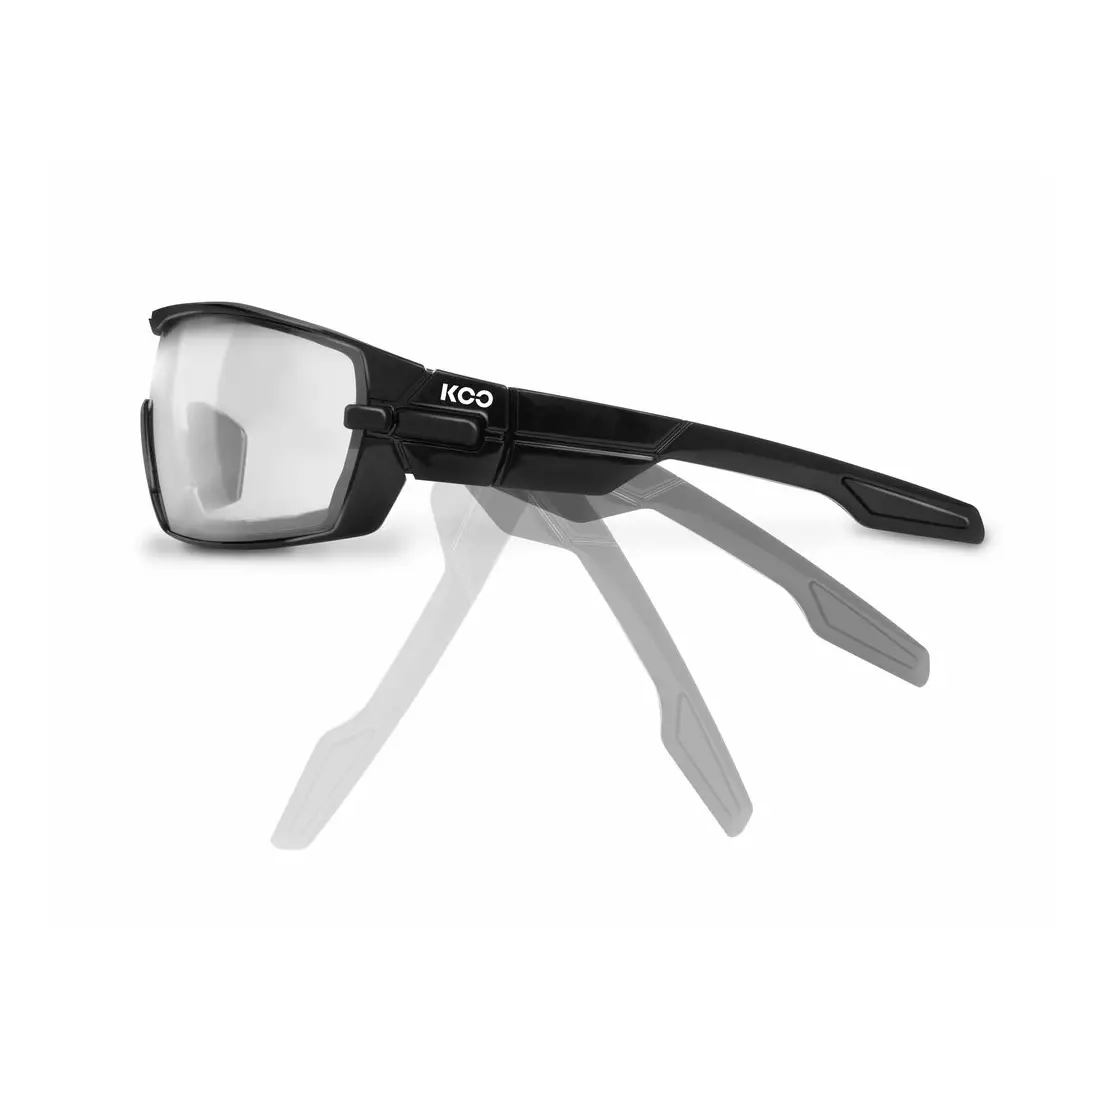 KOO OPEN - sportszemüveg BLACK CEY00002.201 - fekete-szkło-smokemirror/clear